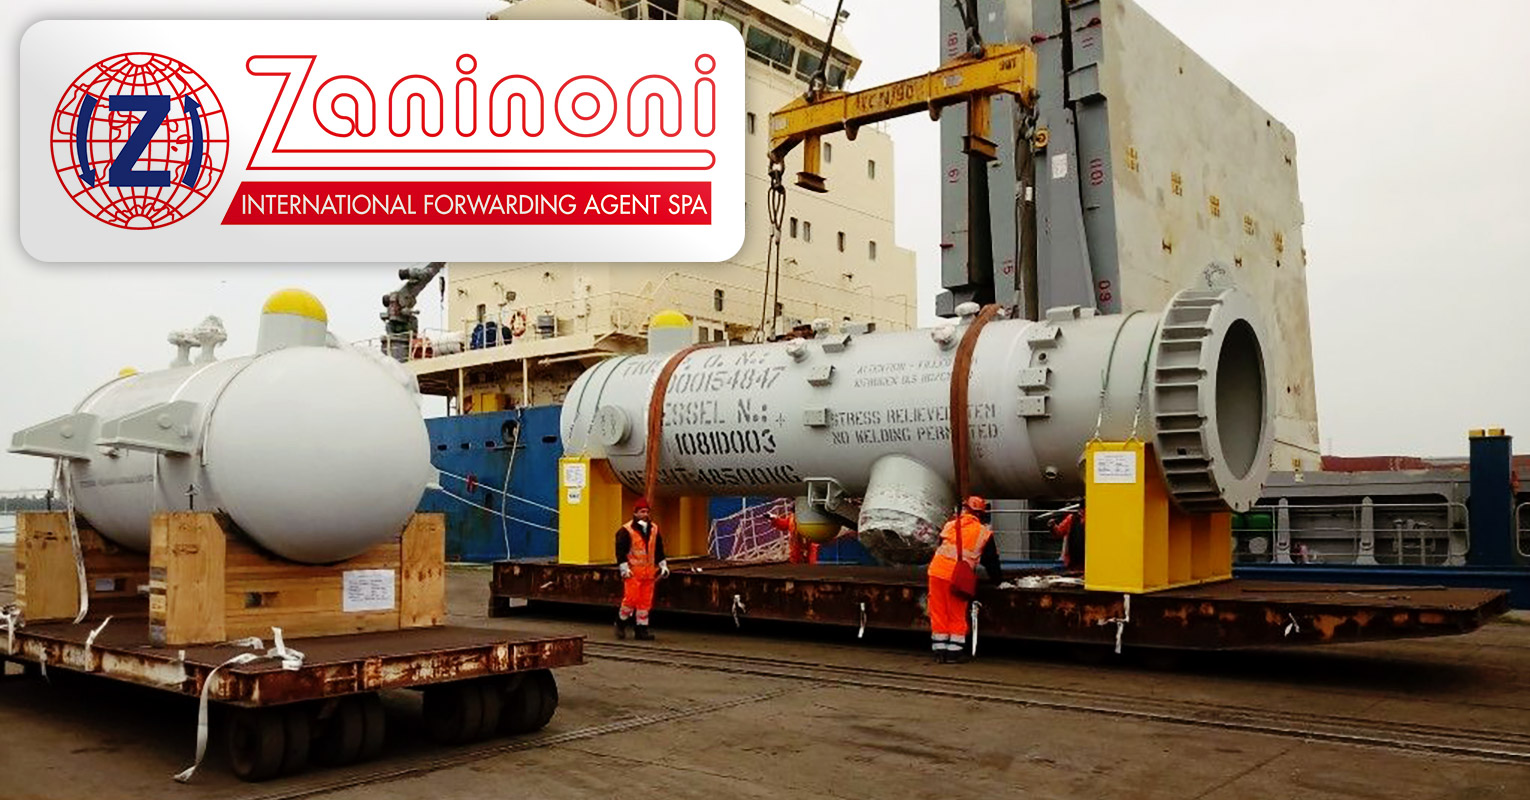 Zaninoni Shipped a 48mt Heat Exchanger and 18mt Pressure Vessel to Egypt